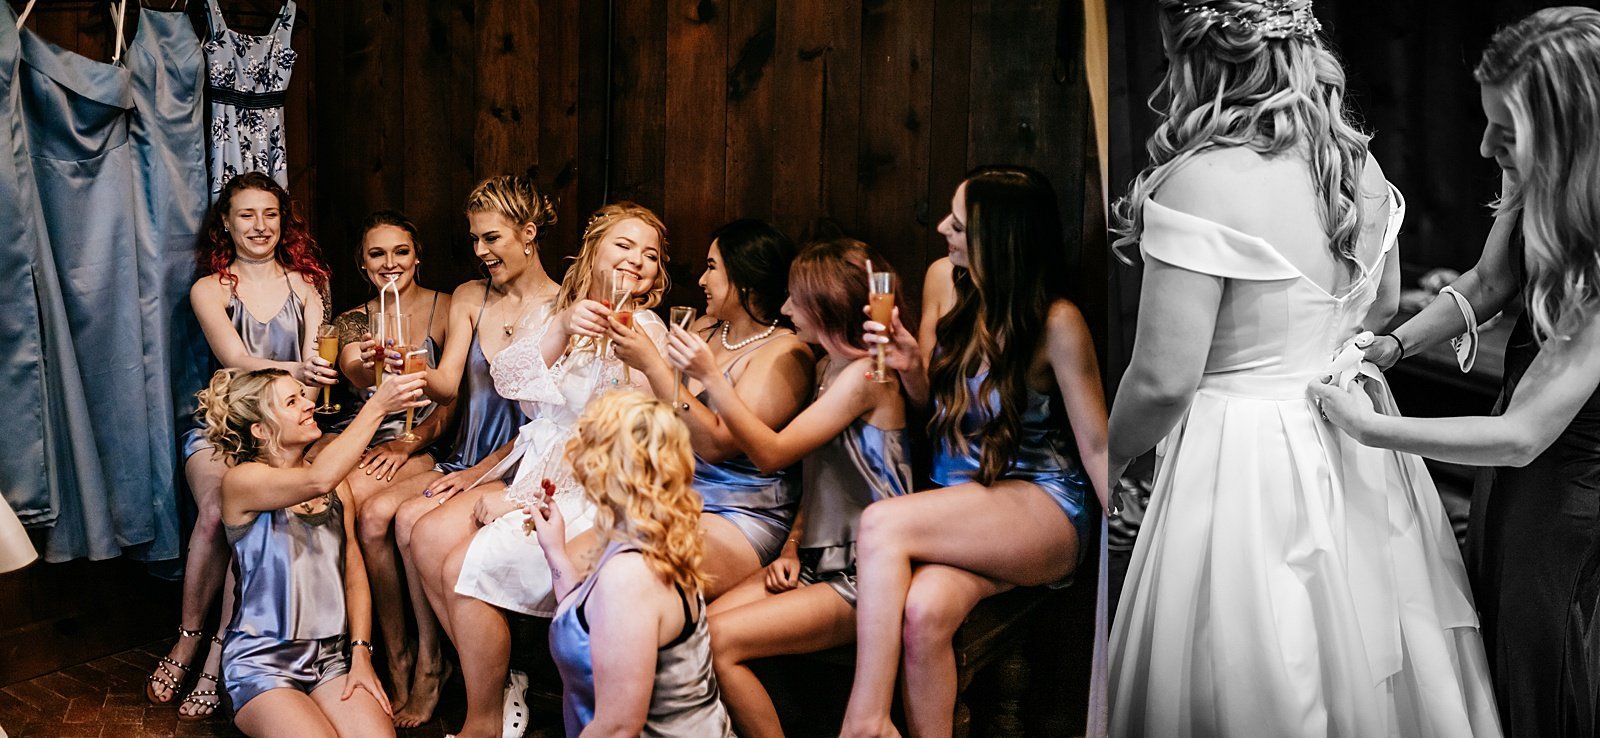  A bride and her bridesmaids celebrating before the ceremony by Minneapolis wedding photographer, McKenzie Berquam.  